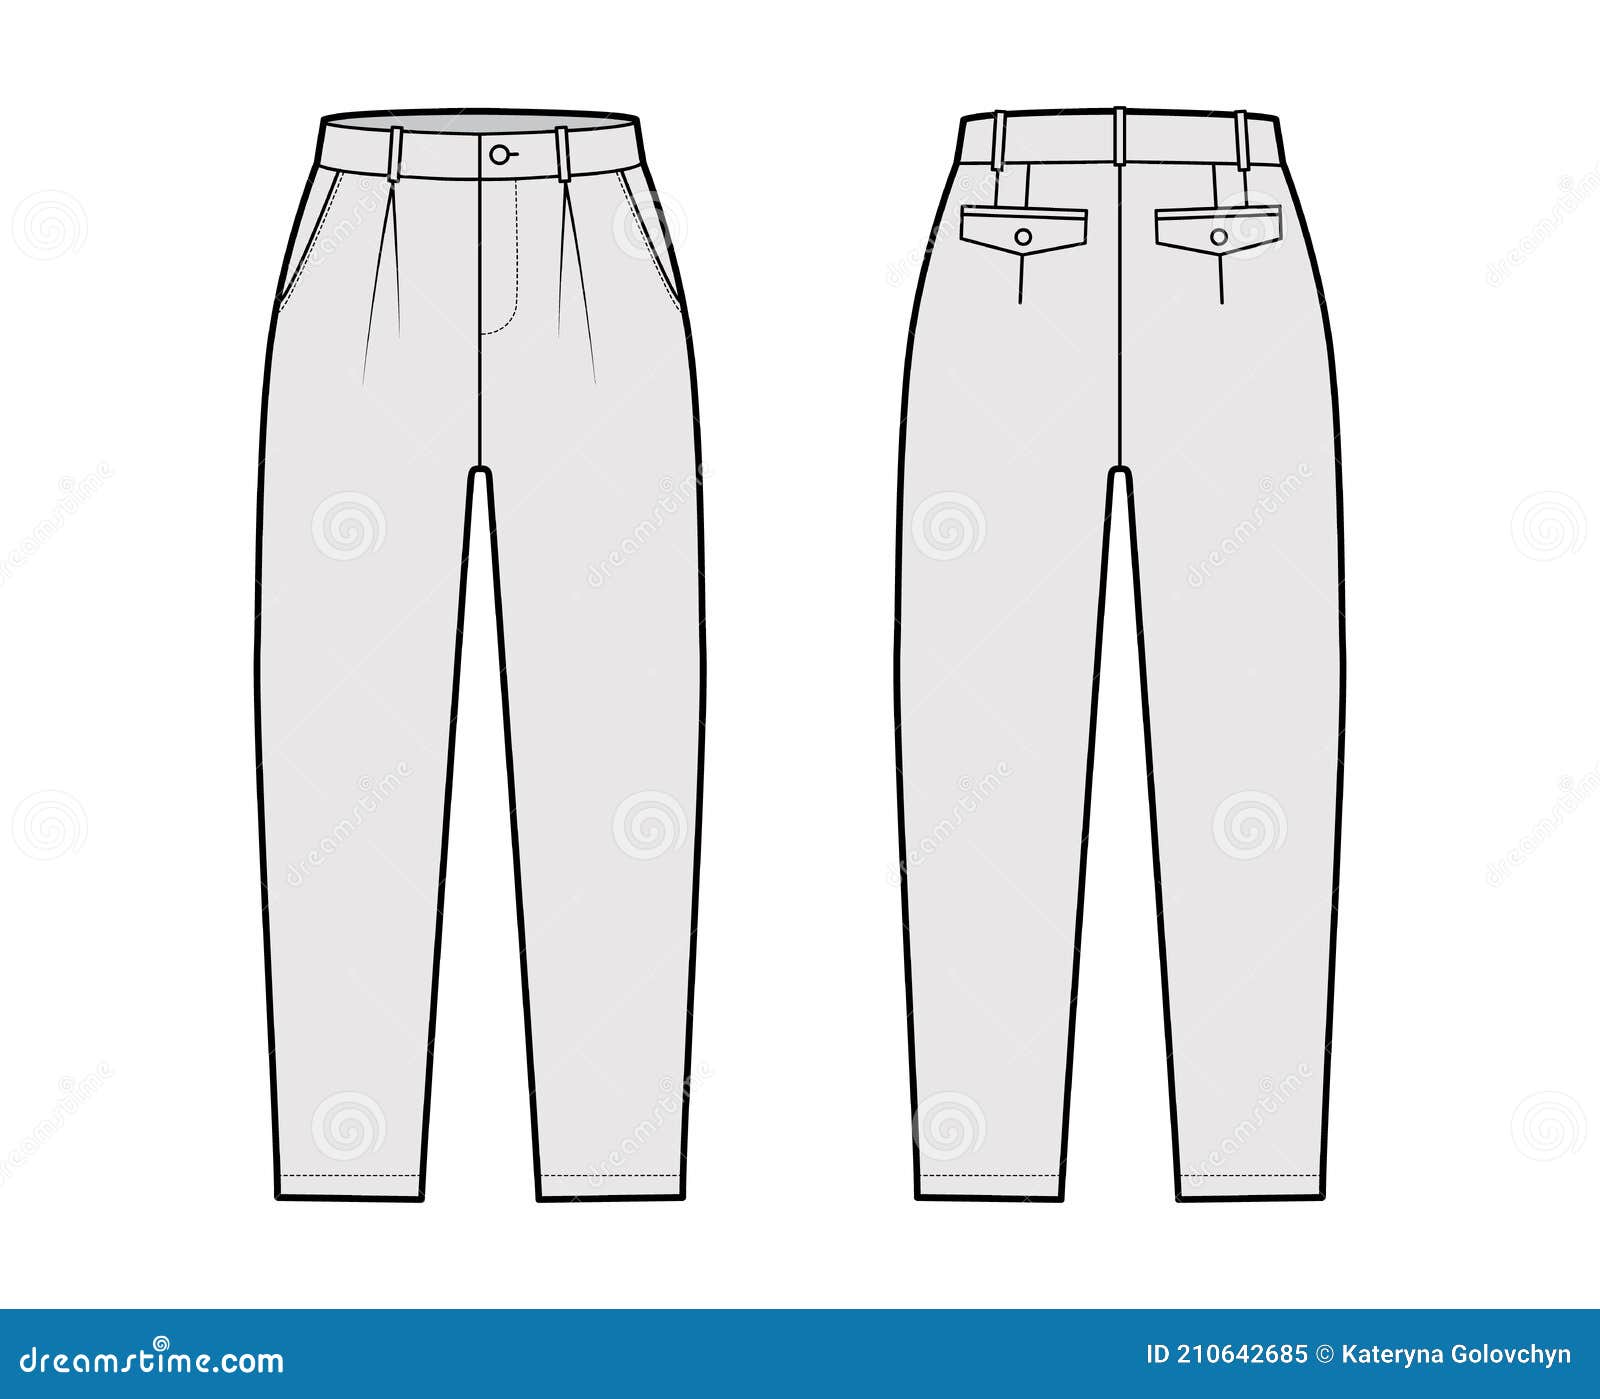 Capri Pants Technical Fashion Illustration with Belt Loops, Mid-calf ...